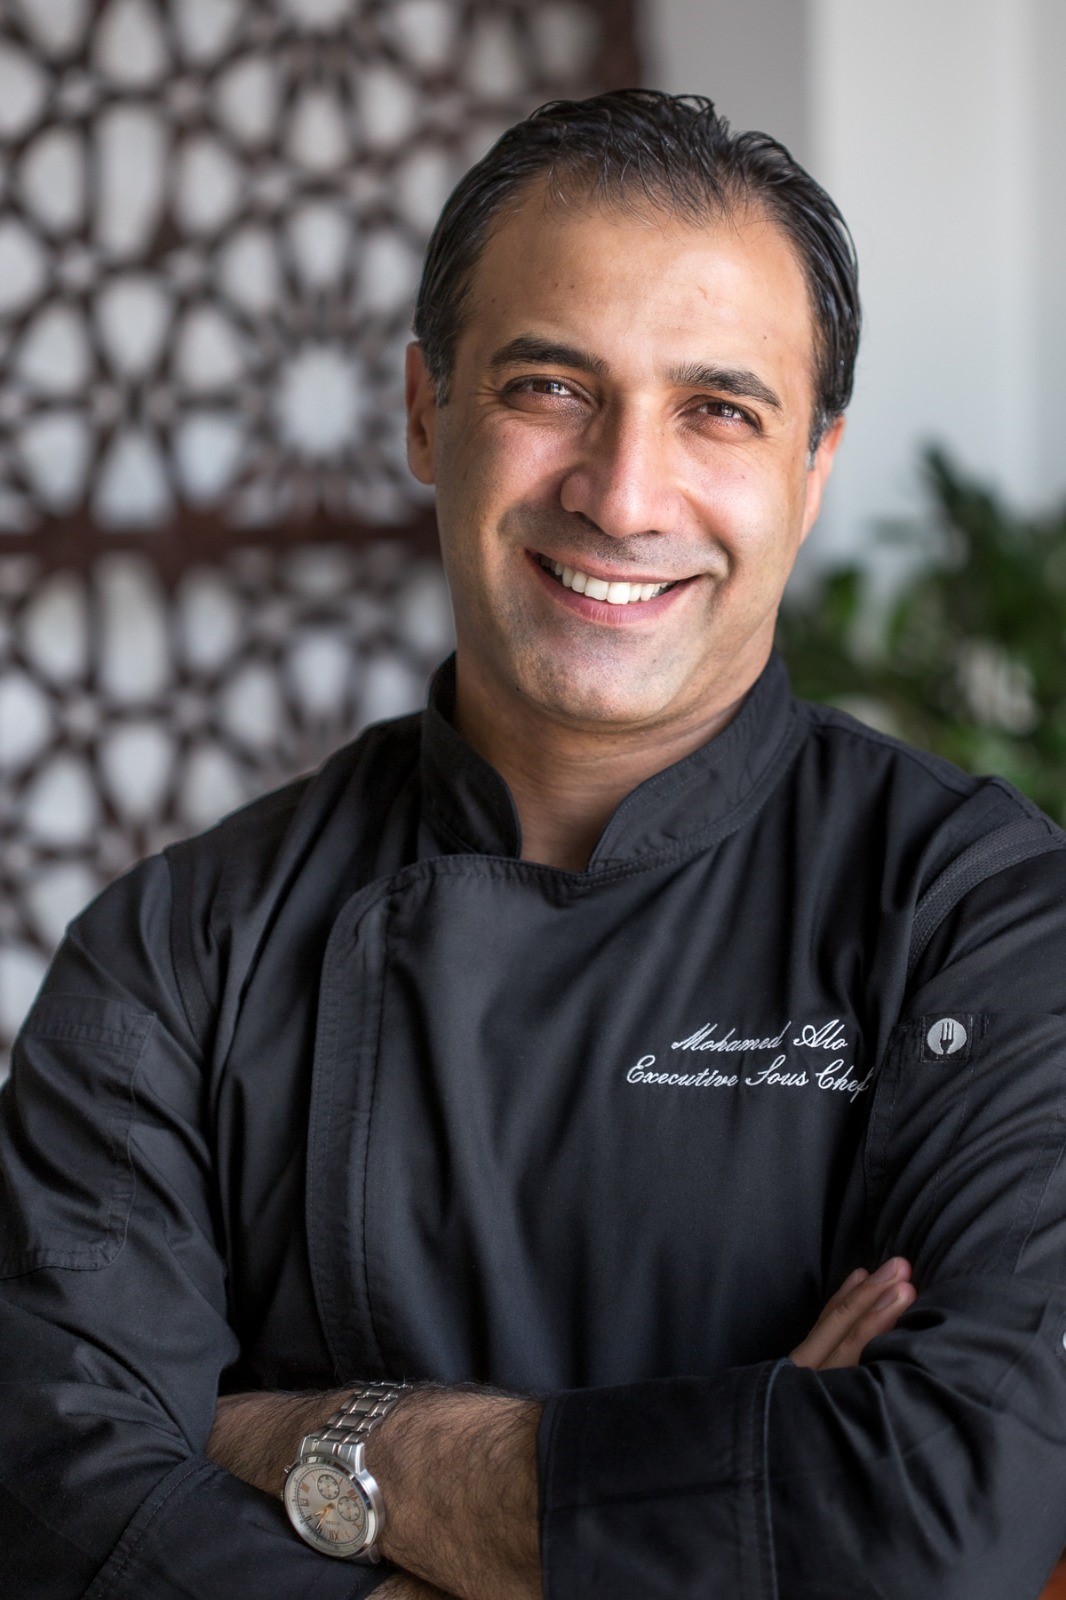 Chef Mohamed Alo - Executive Sous Chef al najada